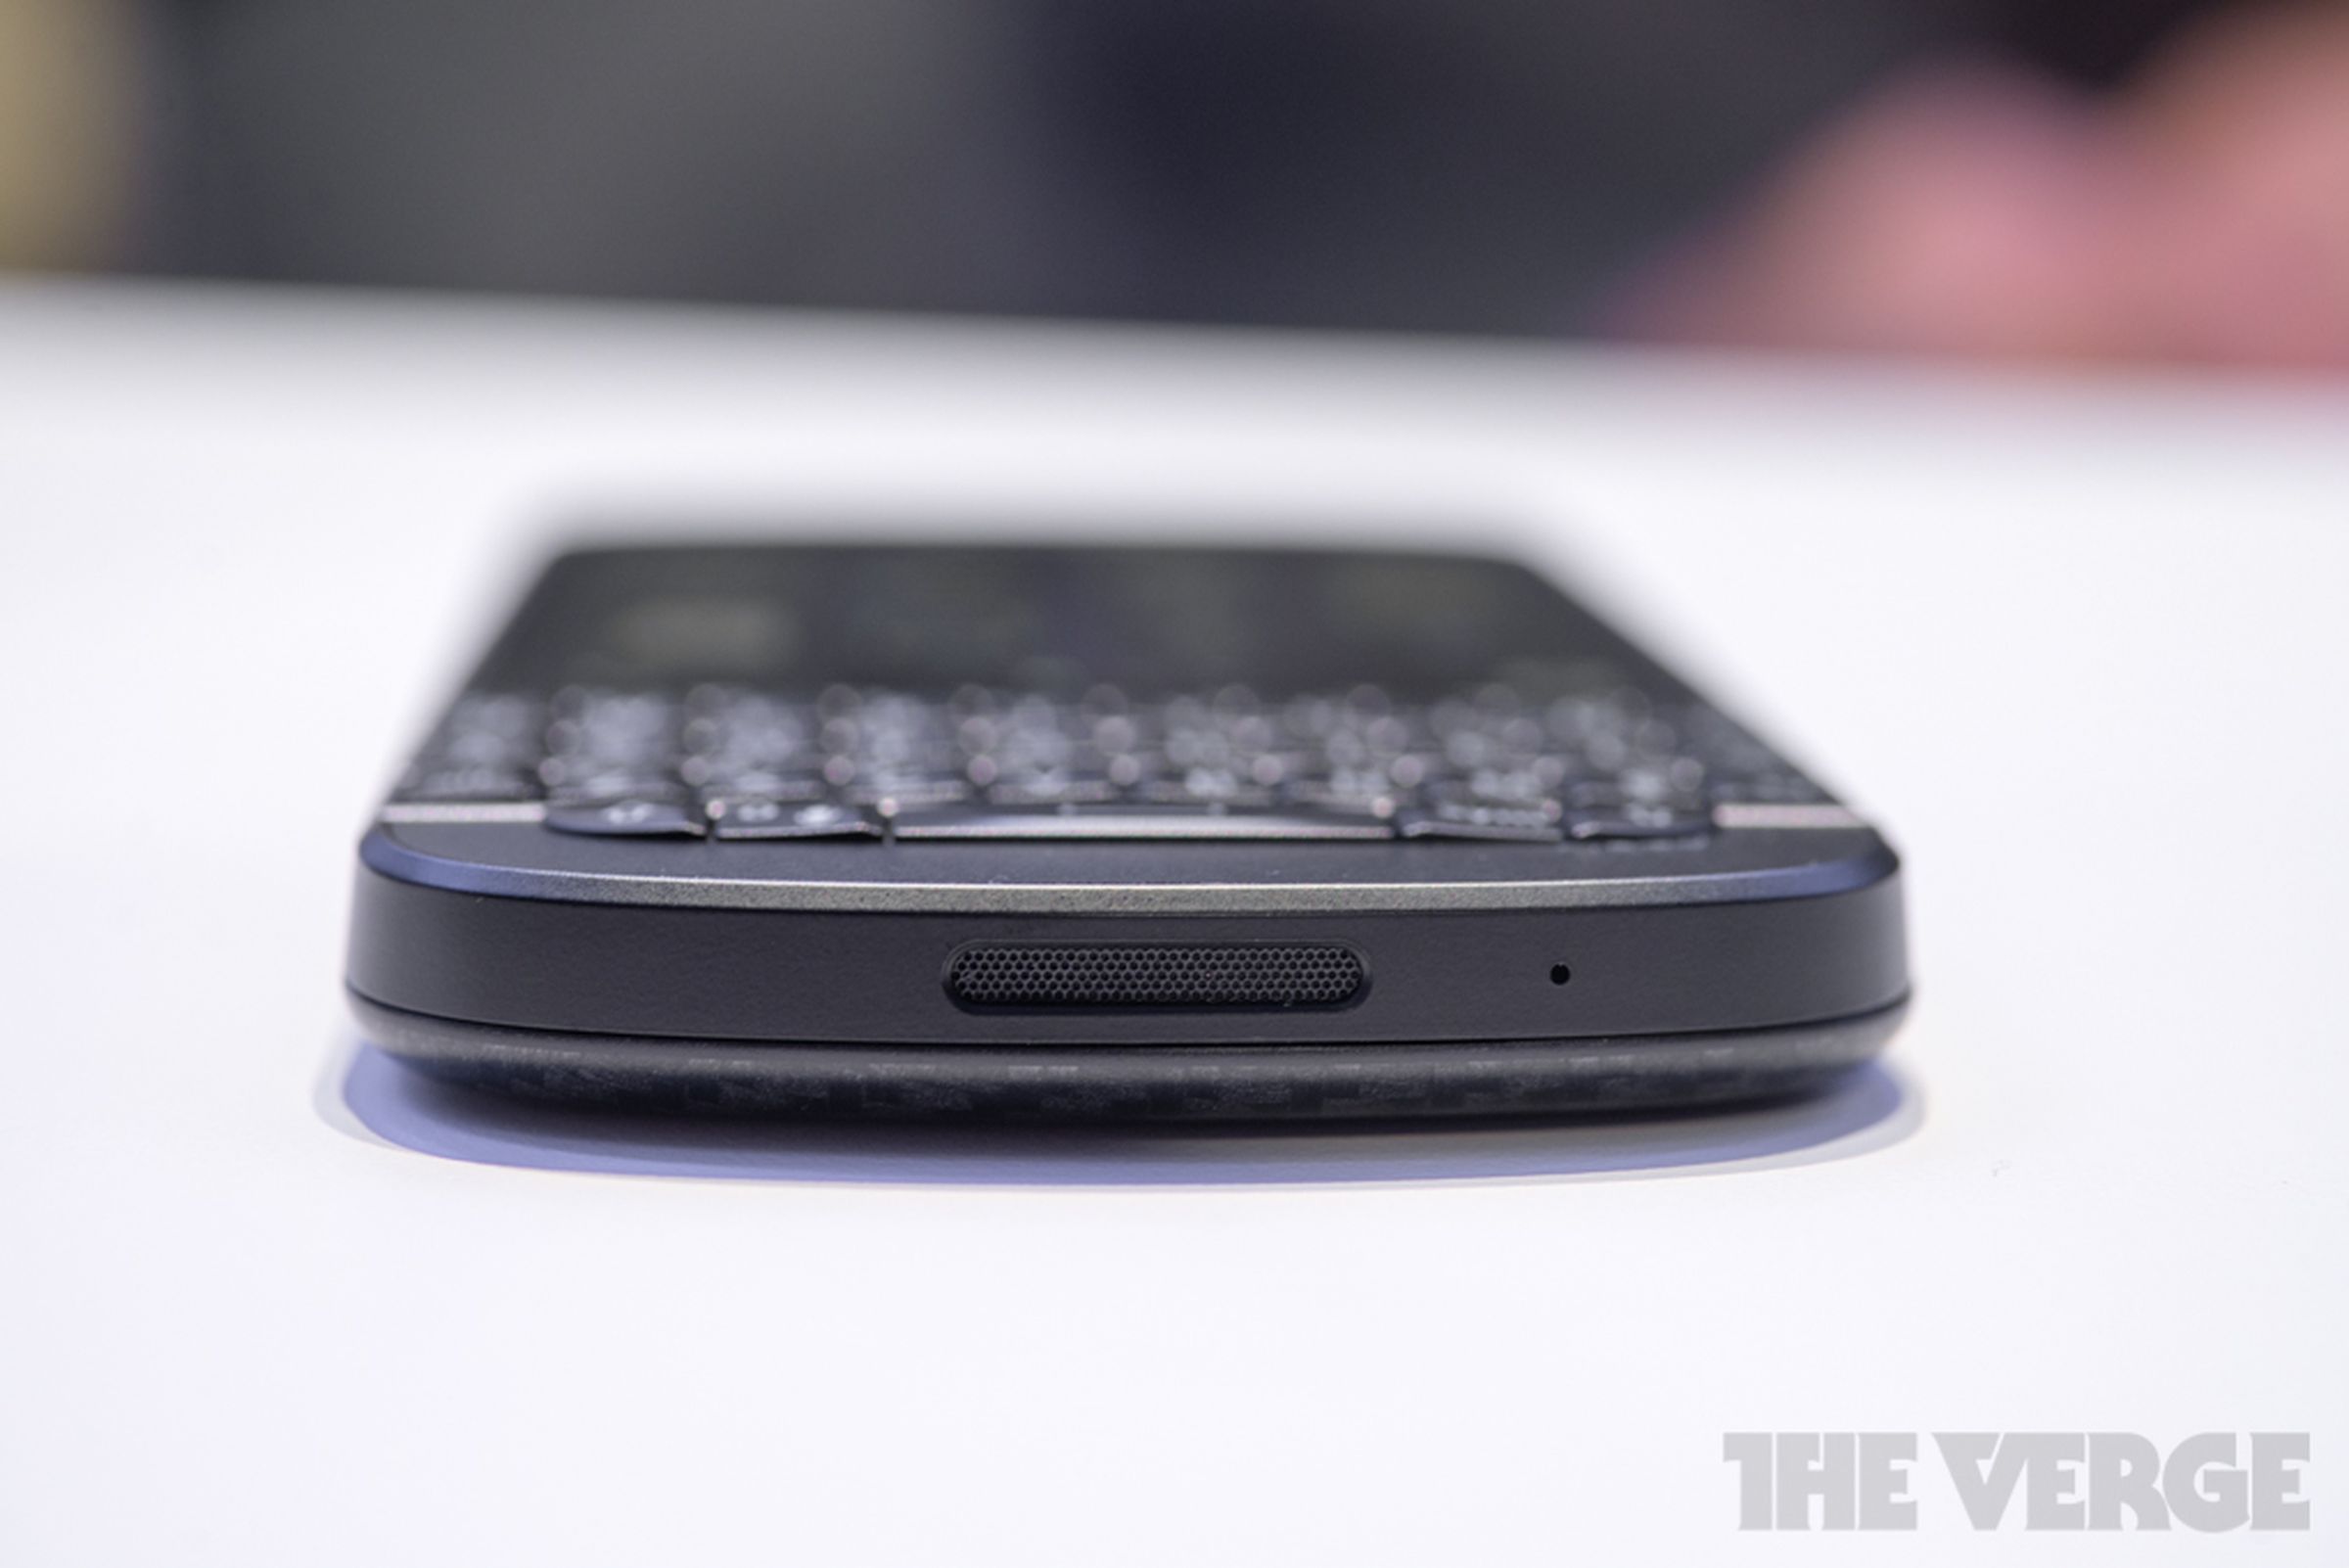 BlackBerry Q10 hands-on photos